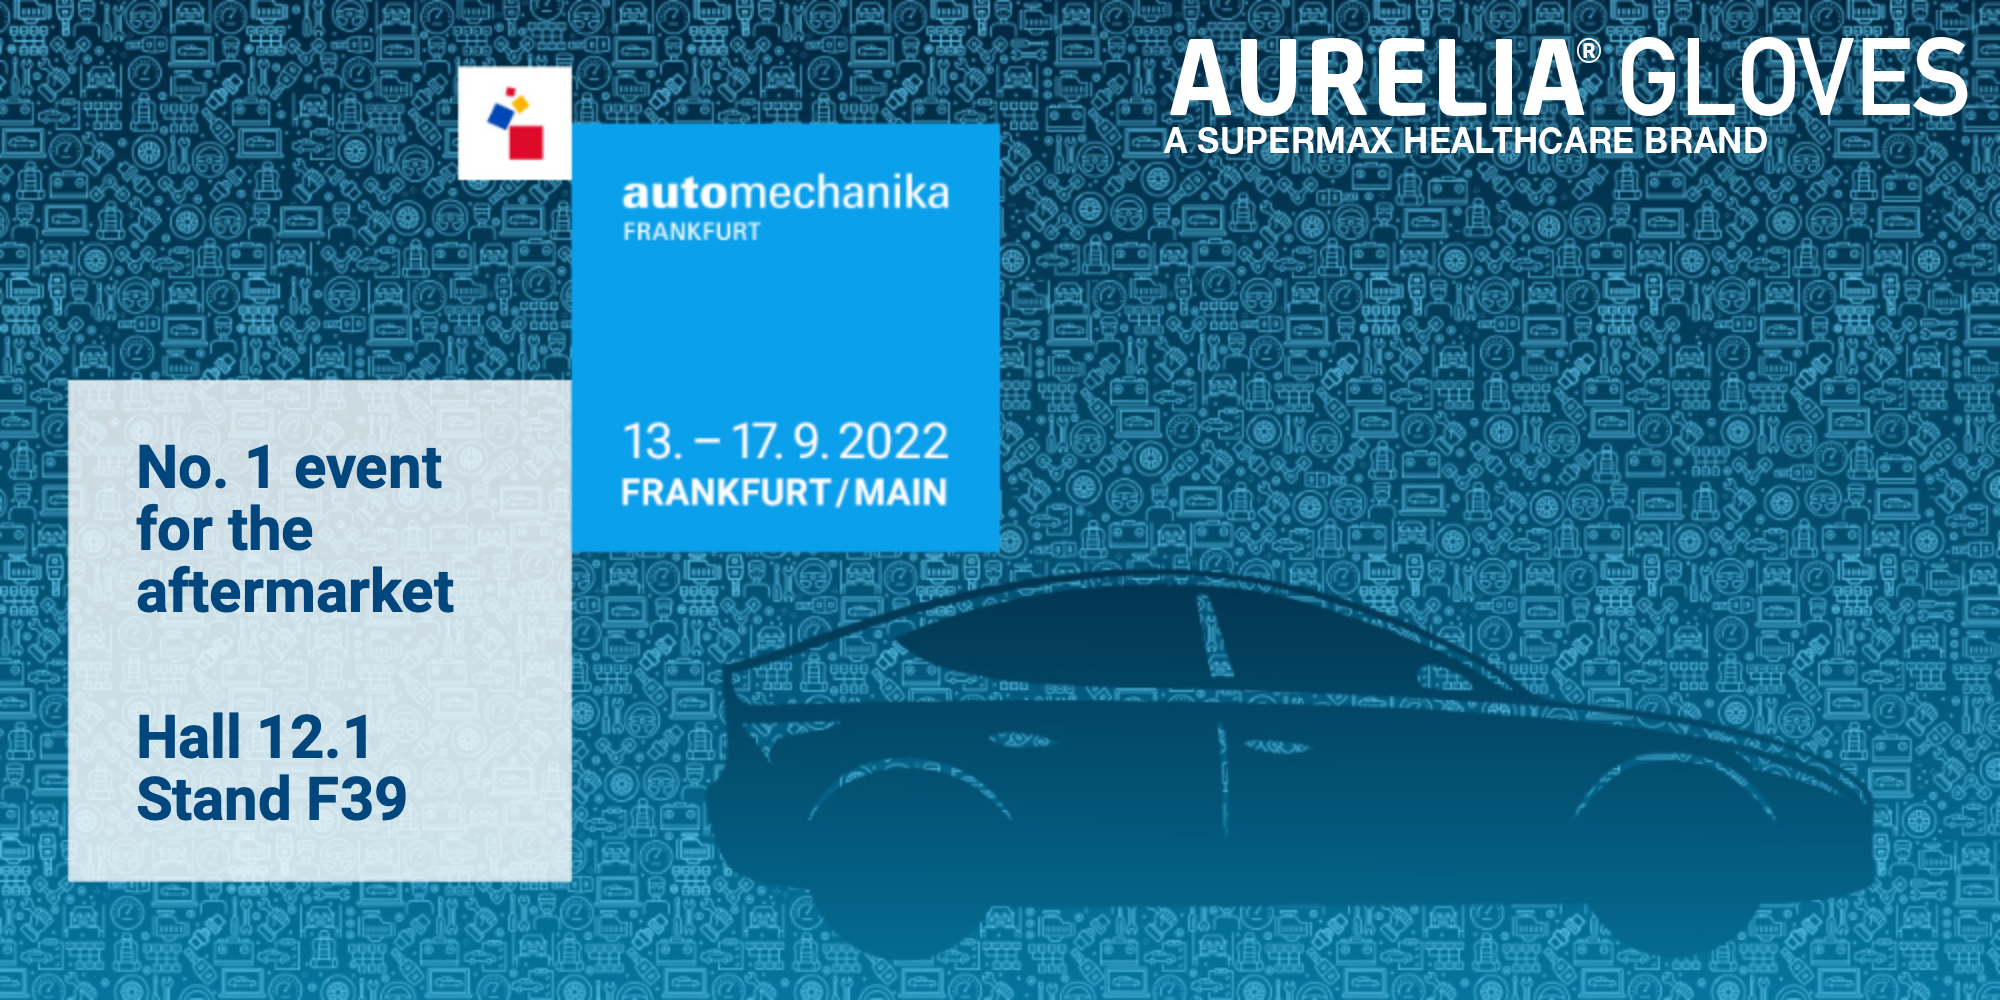 Automechanika Frankfurt 2022